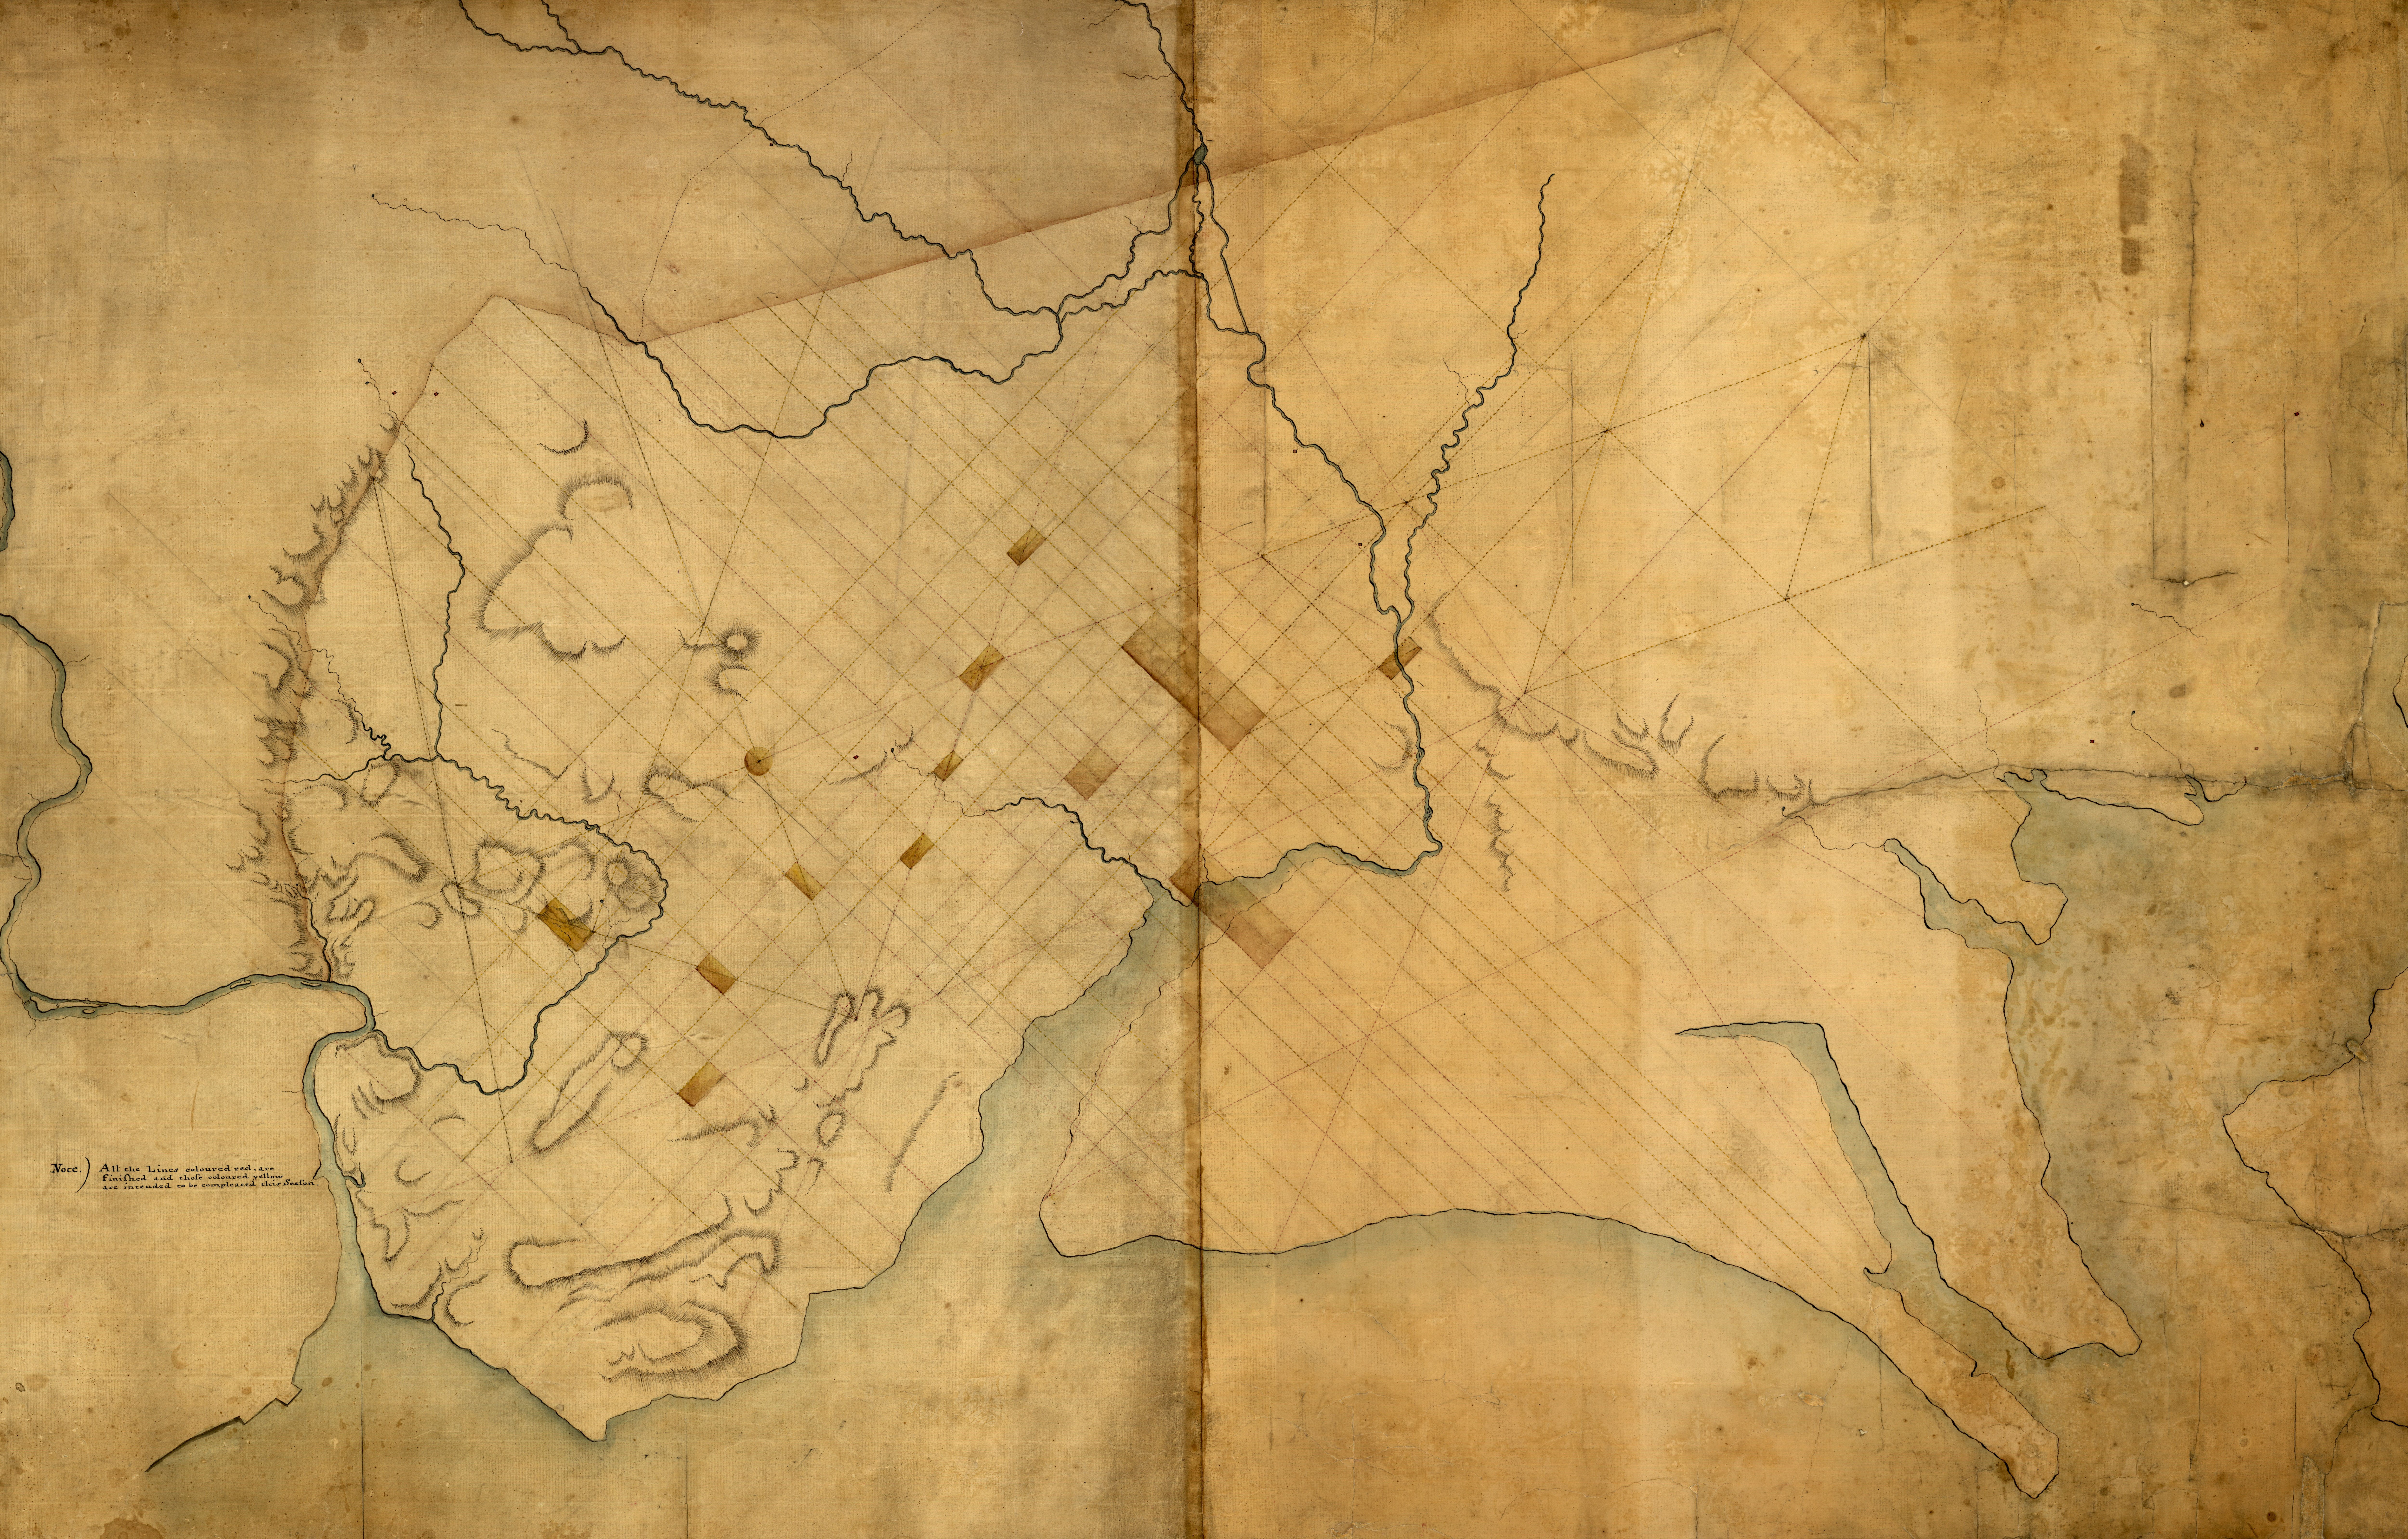 Image of Pierre Charles L'Enfant's 1791 Dotted Line Map of Washington D.C.